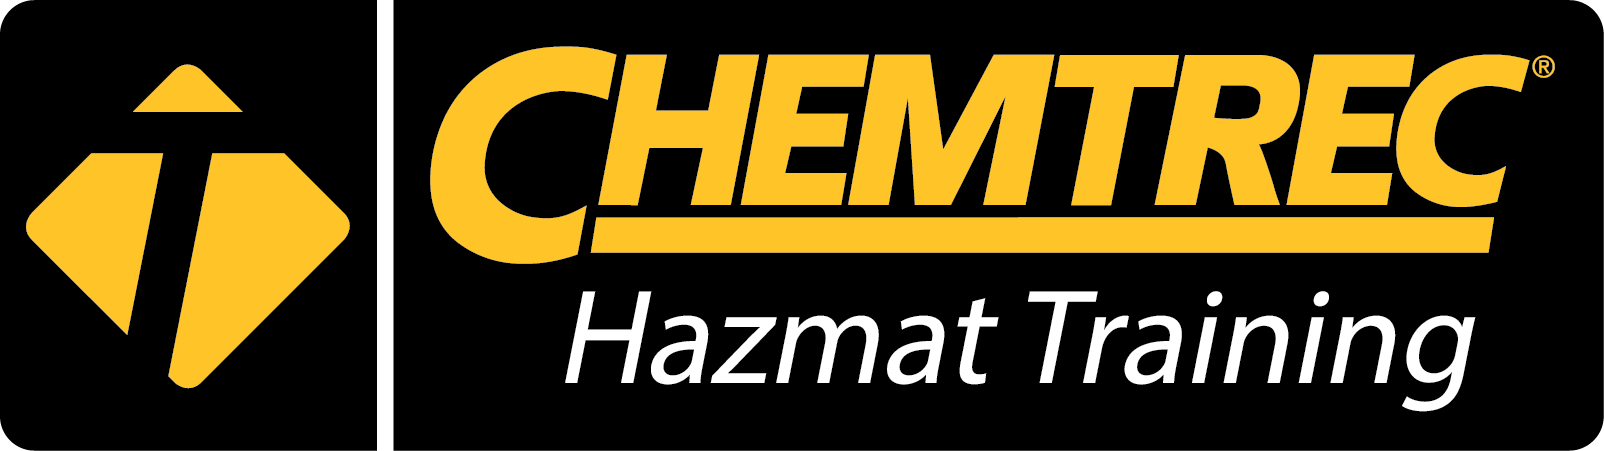 CHEMTREC launches online hazmat training